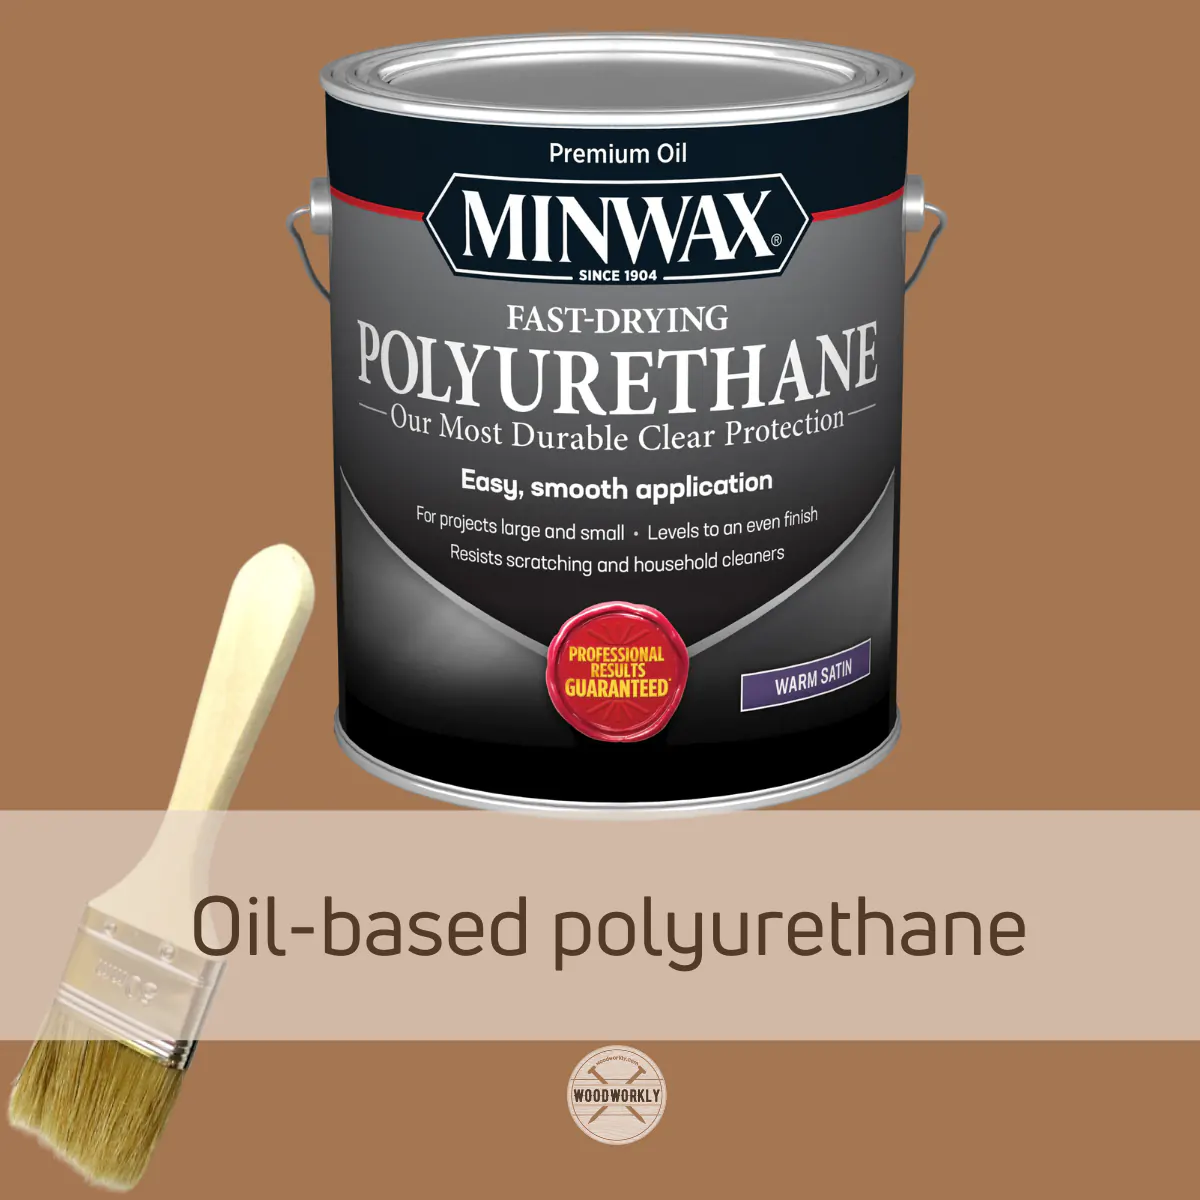 Oil-based polyurethane